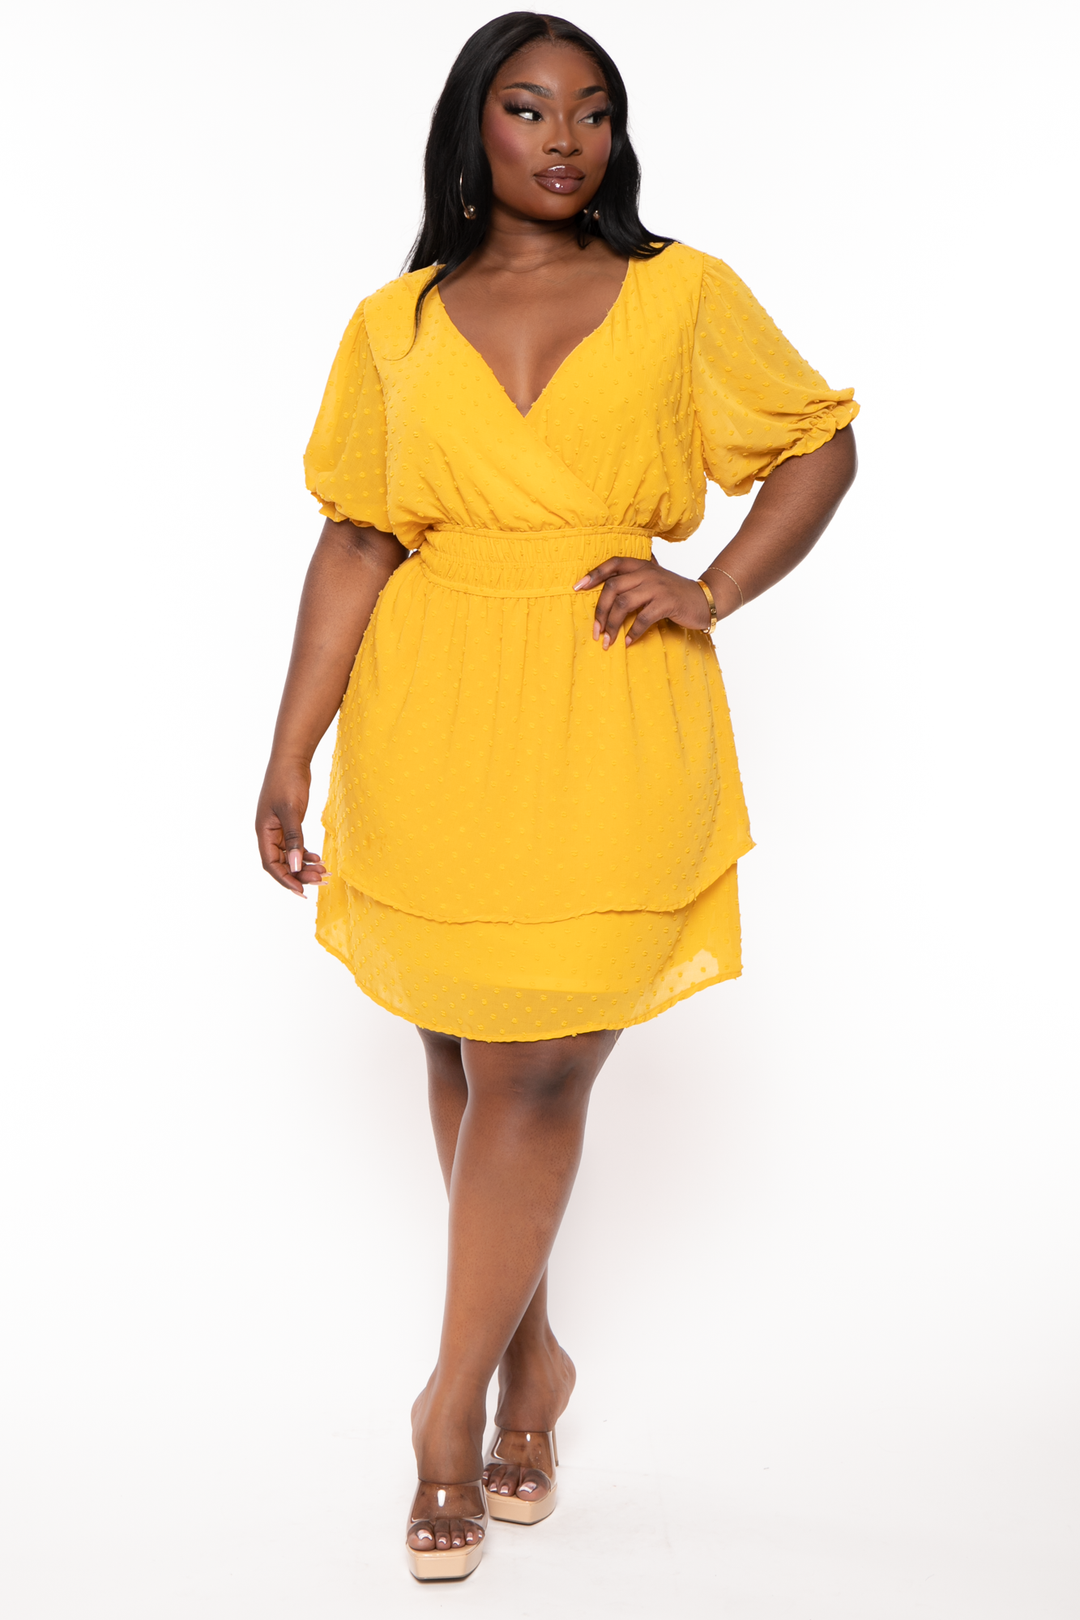 Curvy Sense Dresses Plus Size Chiffon  Swiss Dot Dress - Yellow